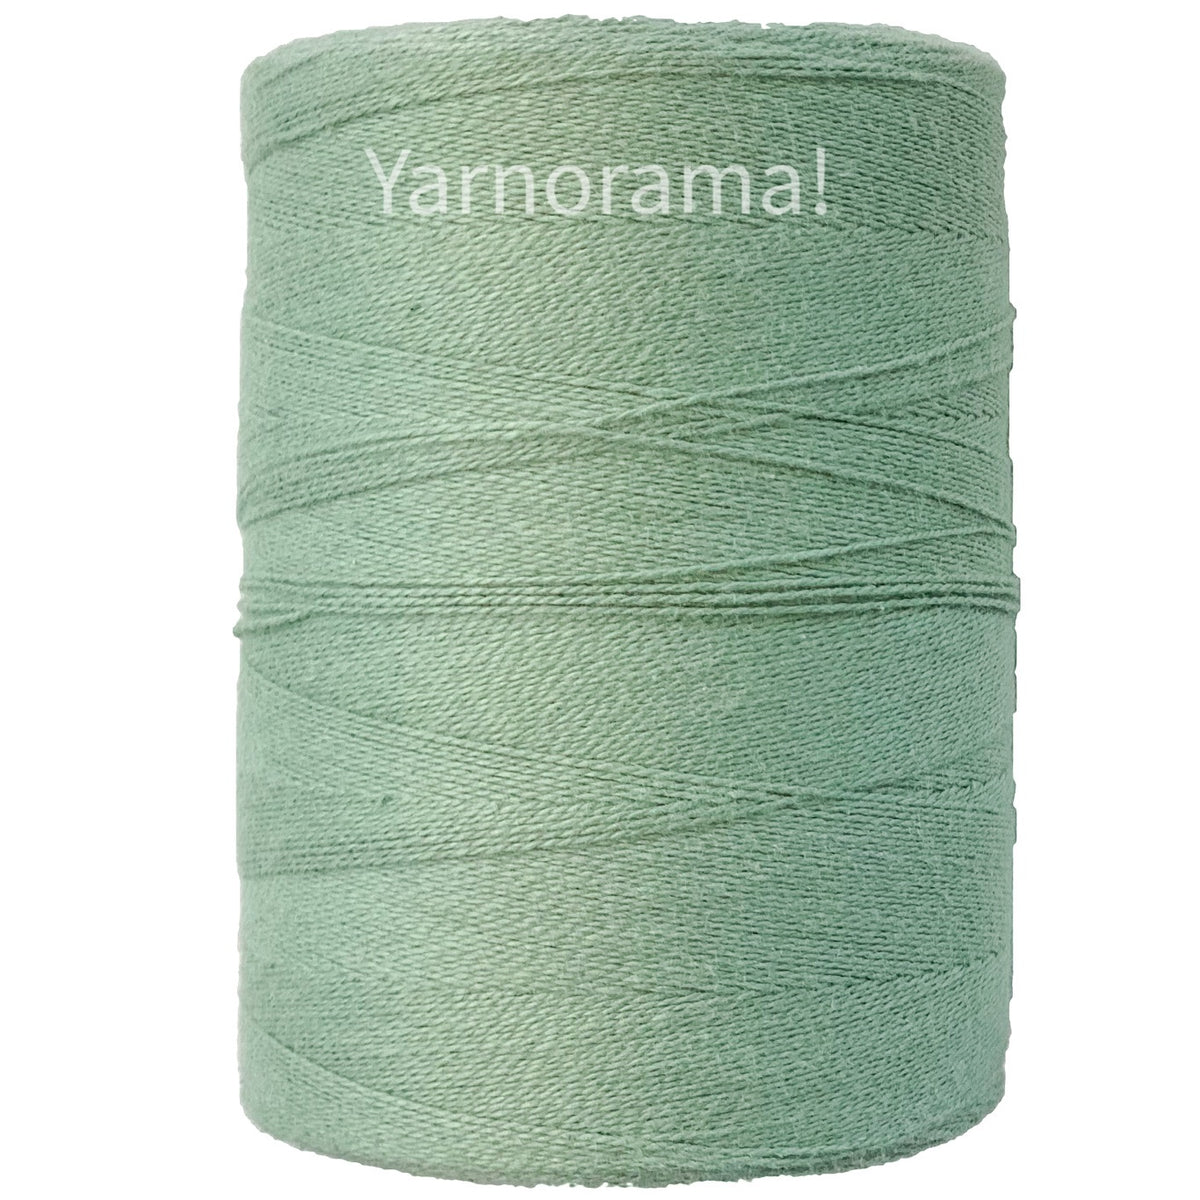 16/2 Unmercerized Cotton - Maurice Brassard-Weaving Yarn-Seafoam - 5110-Yarnorama